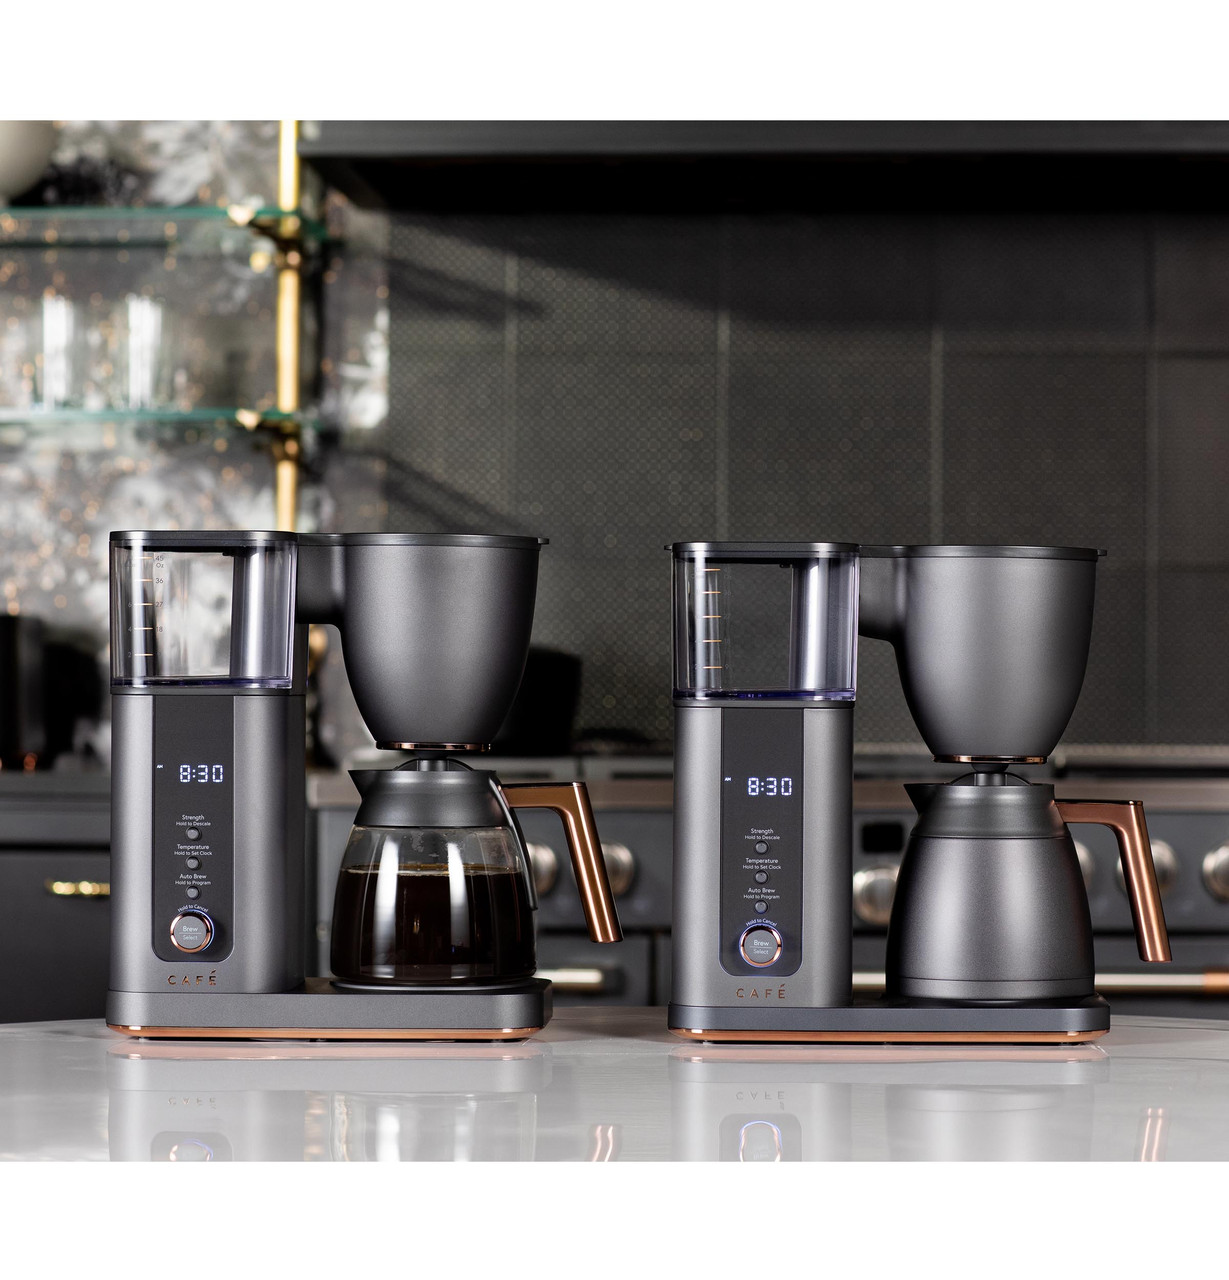 Cafe - C7CDAAS2PS3 - Café™ Specialty Drip Coffee Maker-C7CDAAS2PS3